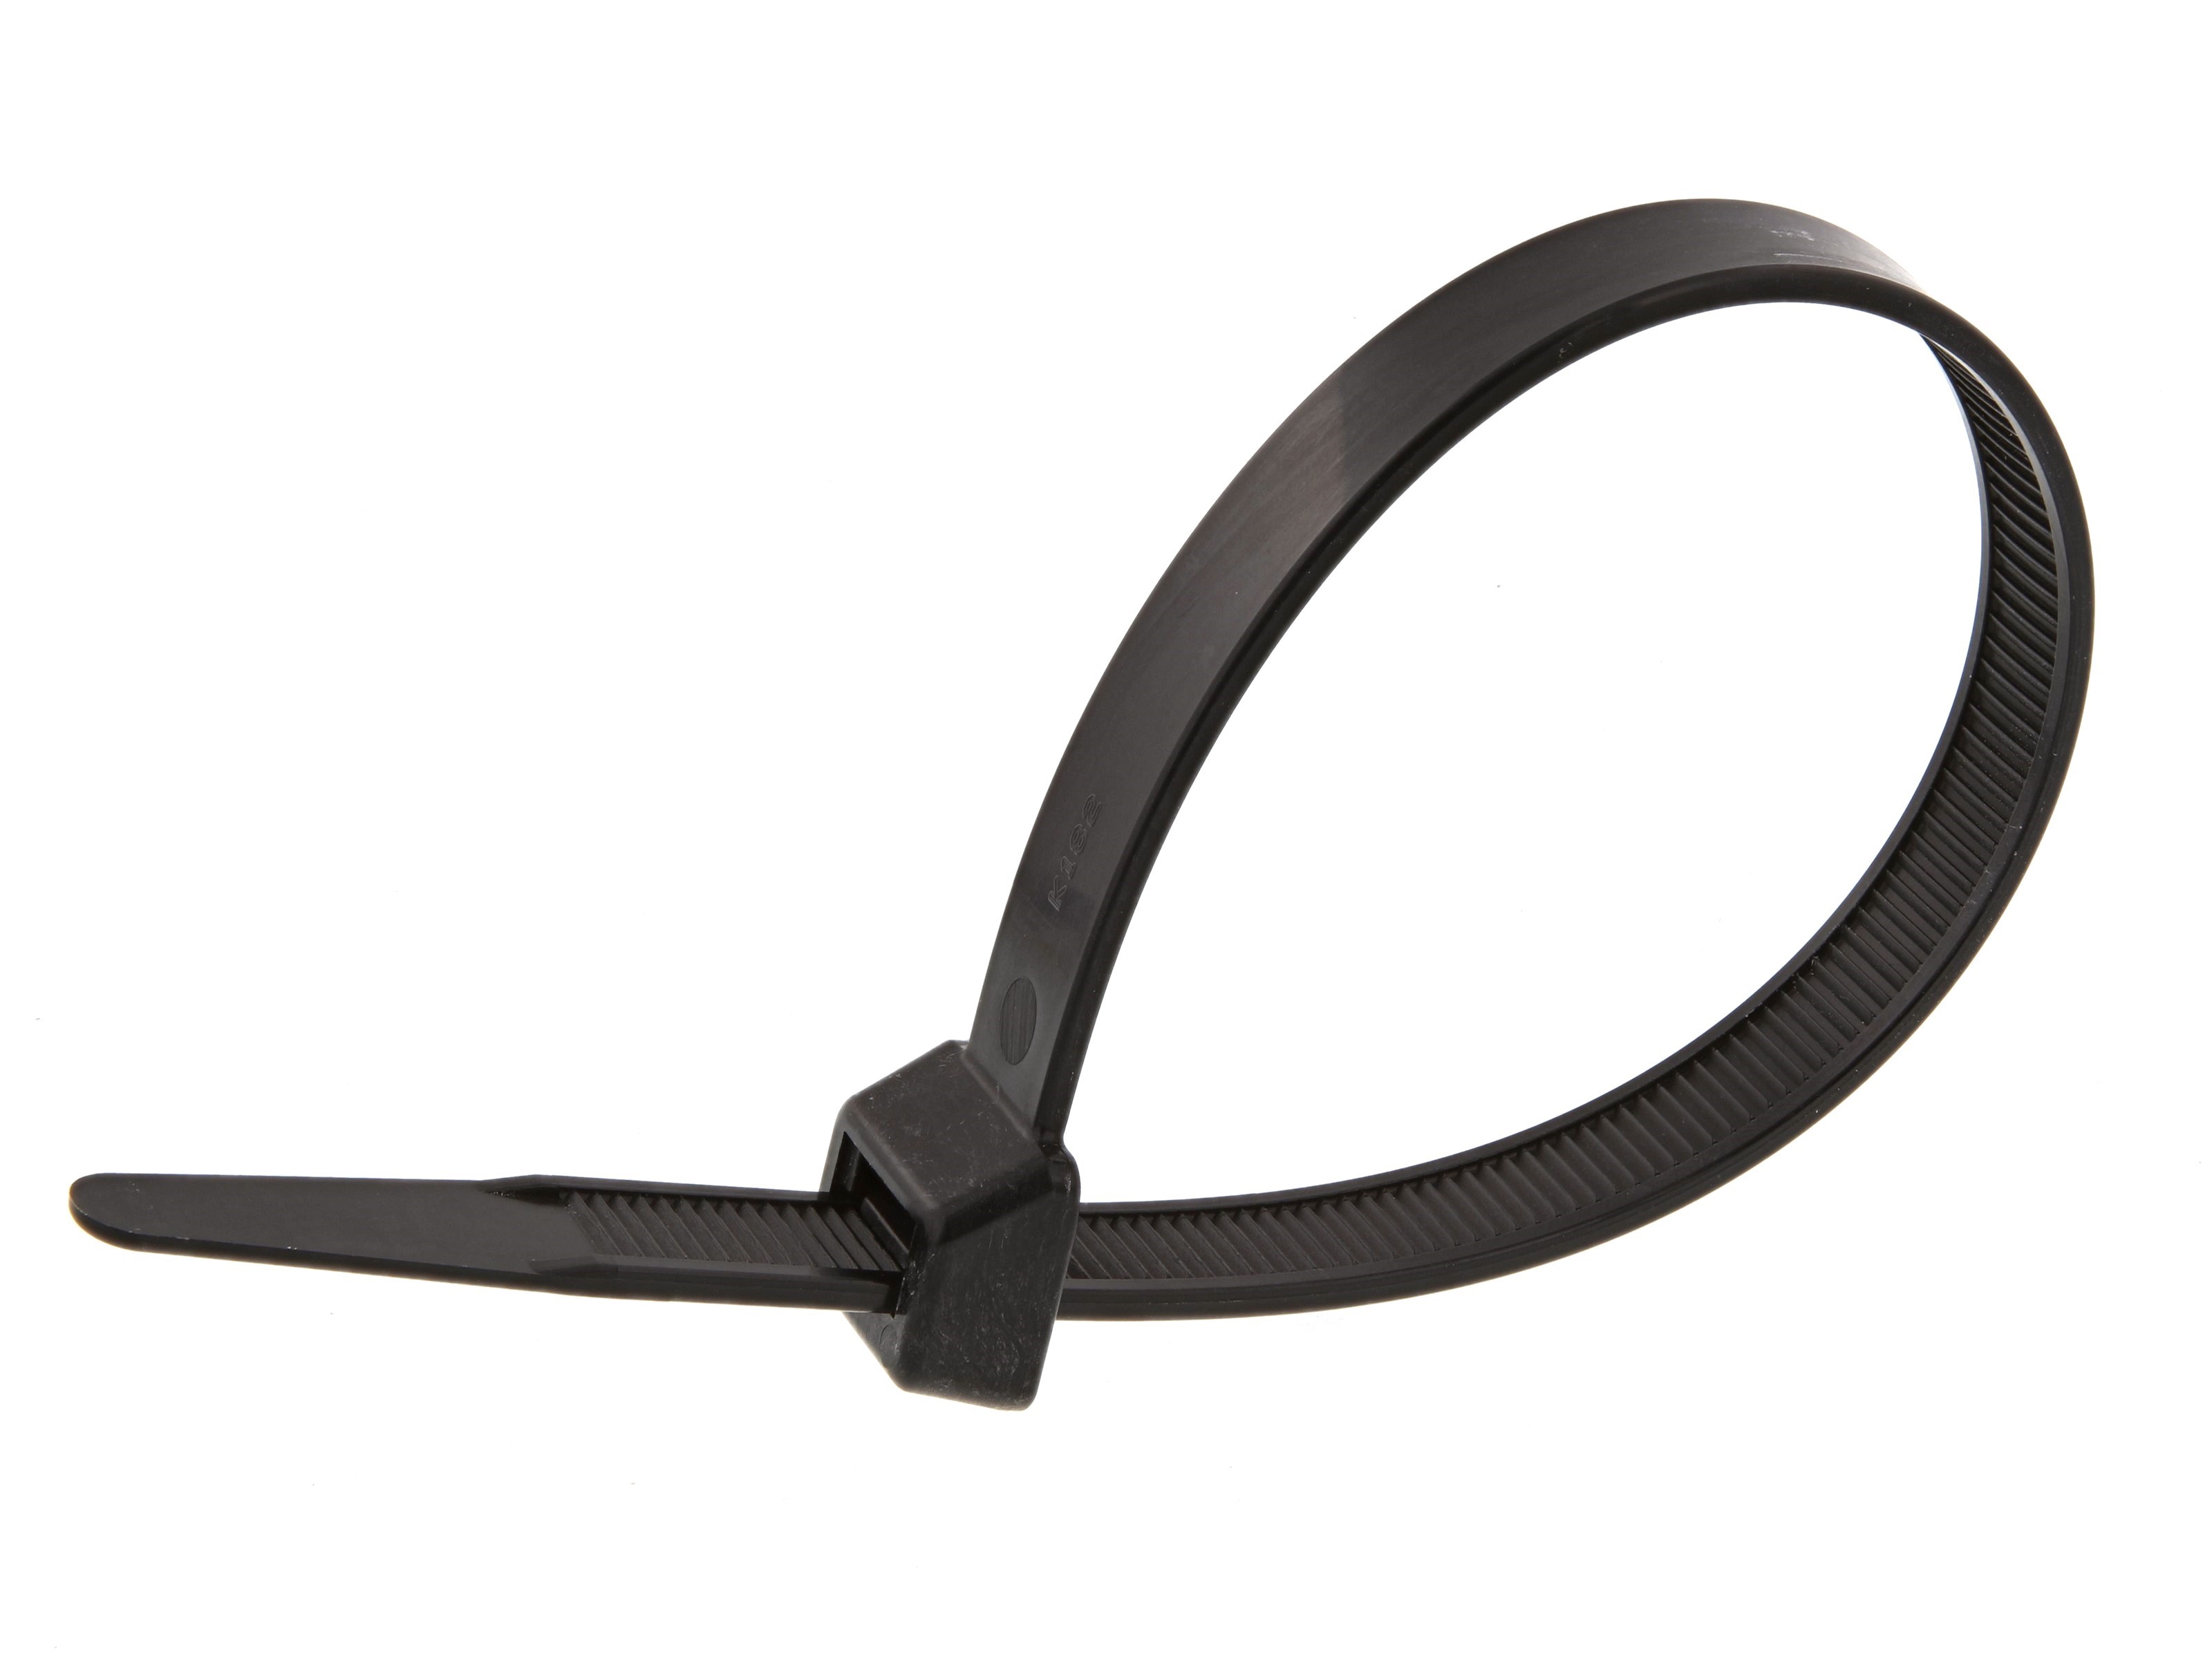 Large Zip Ties Heavy Duty Big Cable Ties Extra Long Tie Wraps Black 26 Inch 60 P 